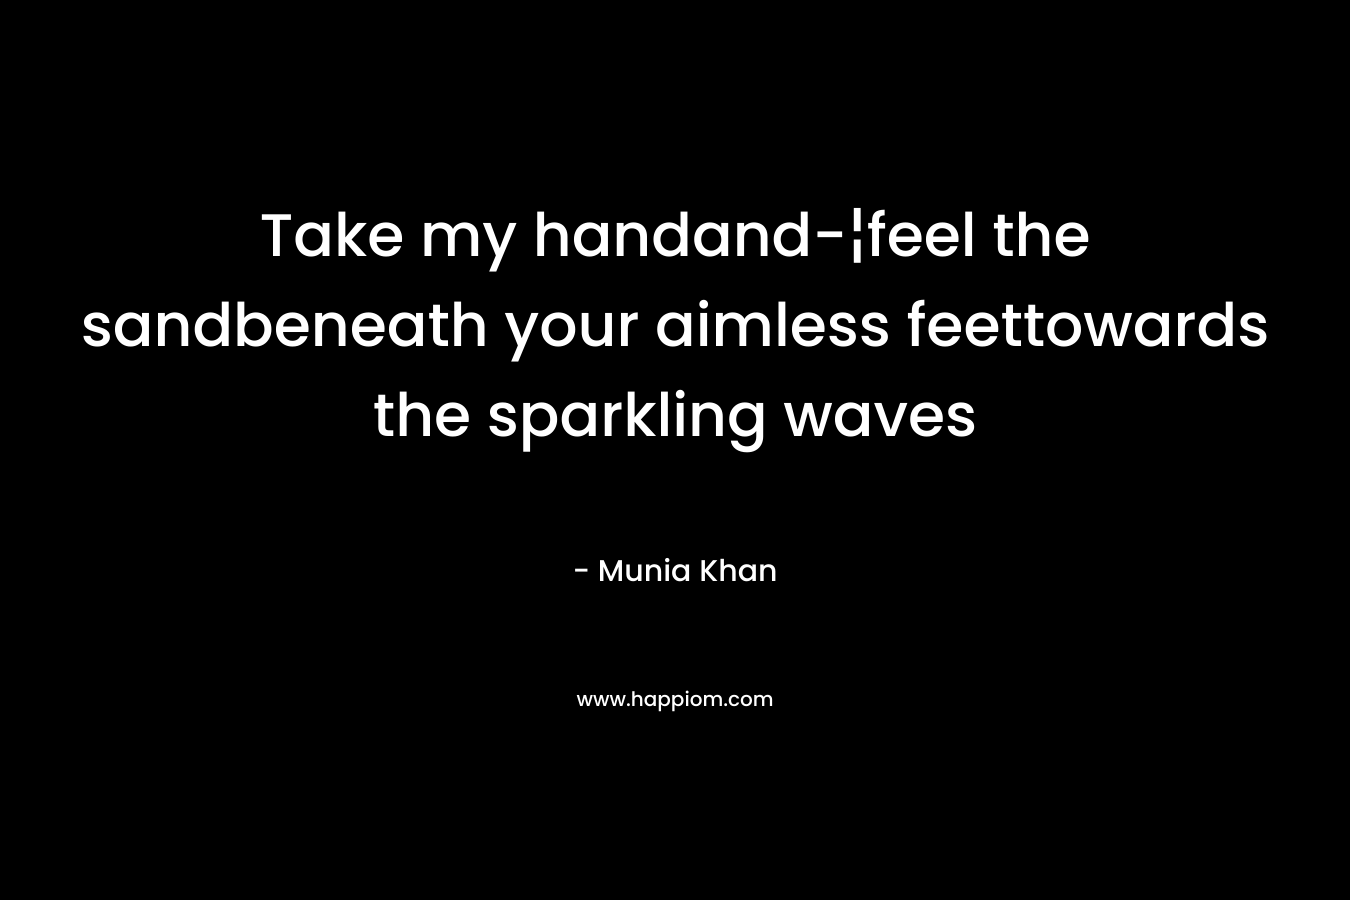 Take my handand-¦feel the sandbeneath your aimless feettowards the sparkling waves